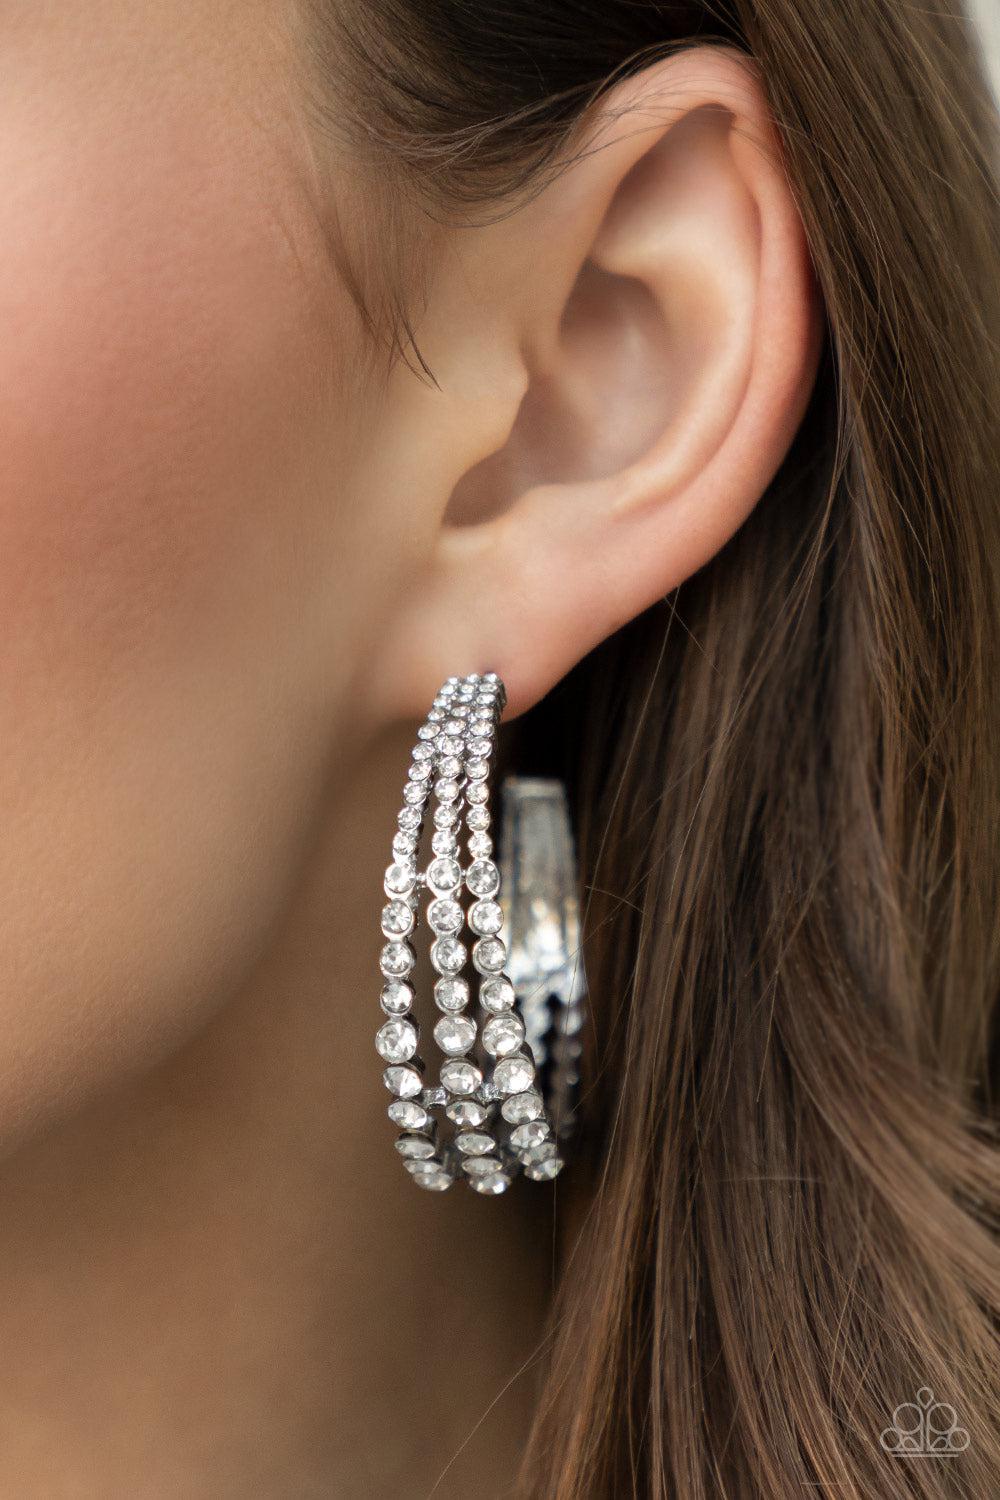 Cosmopolitan Cool White Rhinestone Hoop Earrings - Paparazzi Accessories- on model - CarasShop.com - $5 Jewelry by Cara Jewels